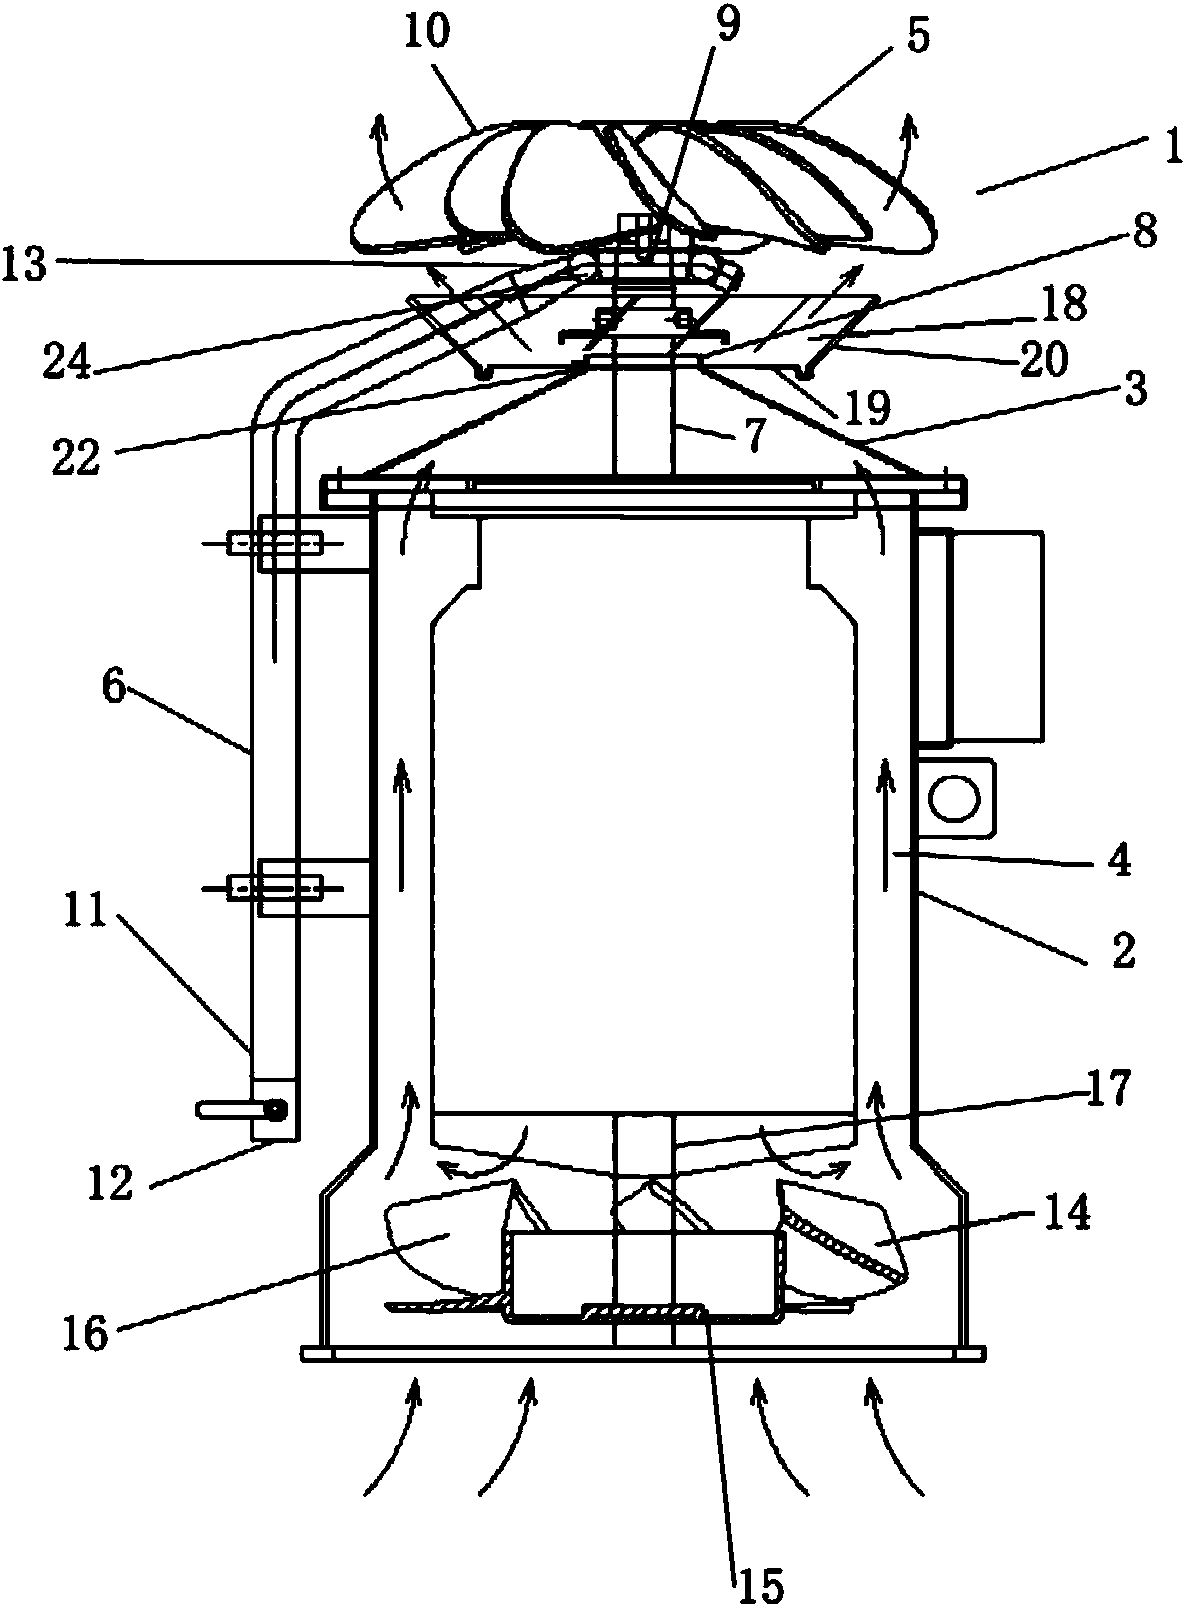 Mechanical evaporator